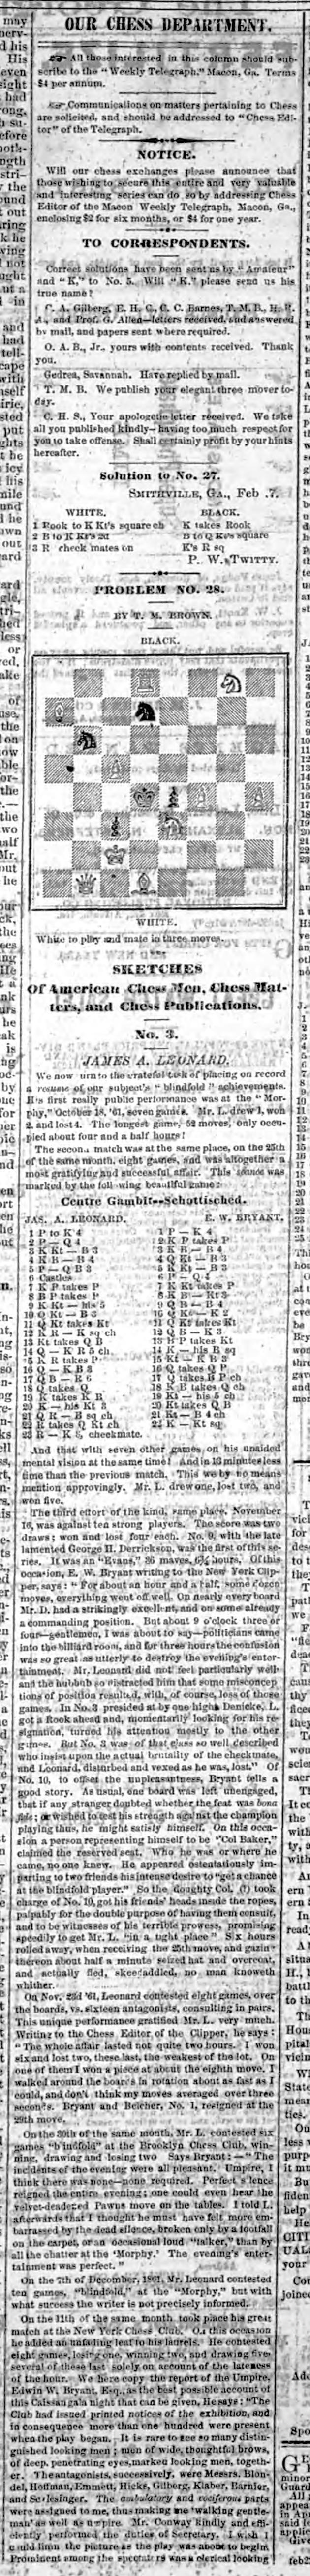 1867.02.22-01 Macon Georgia Weekly Telegraph.jpg